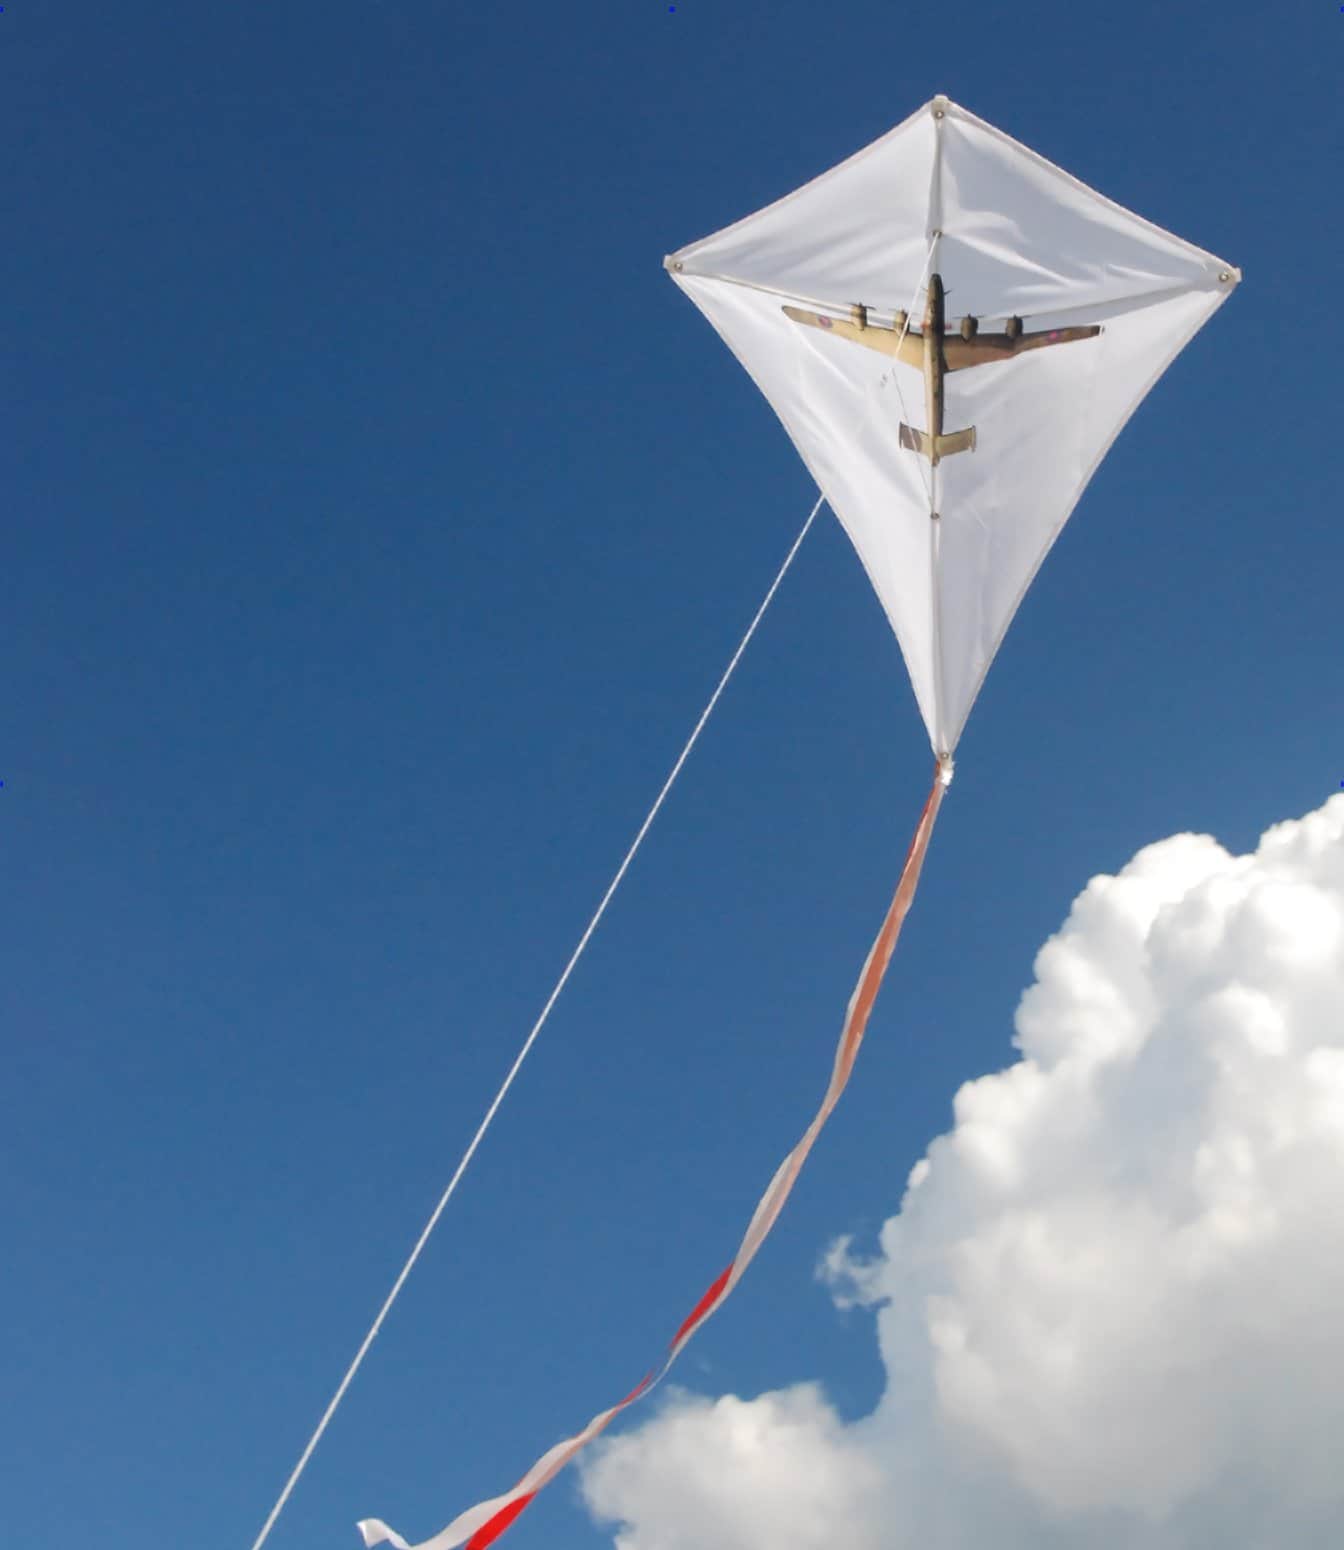 essay topics about kites